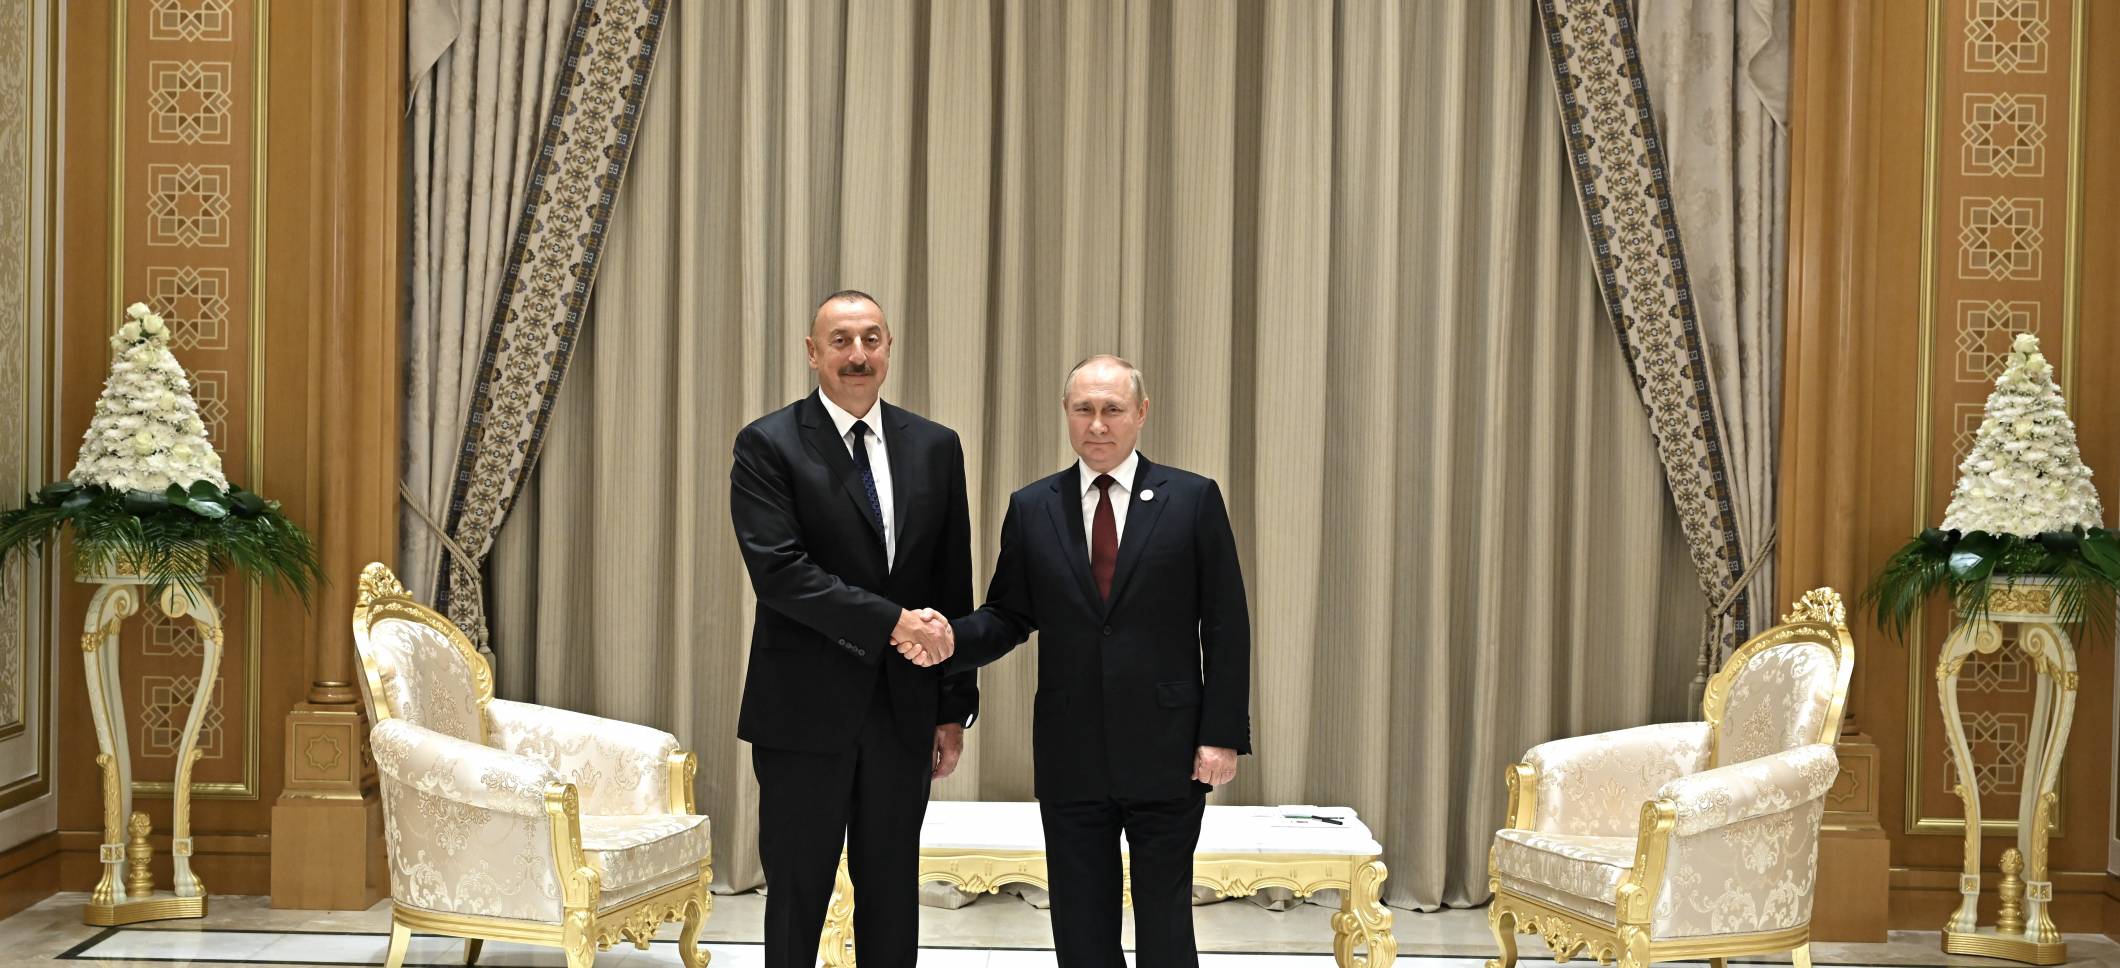 Ilham Aliyev met with President of Russia Vladimir Putin in Ashgabat